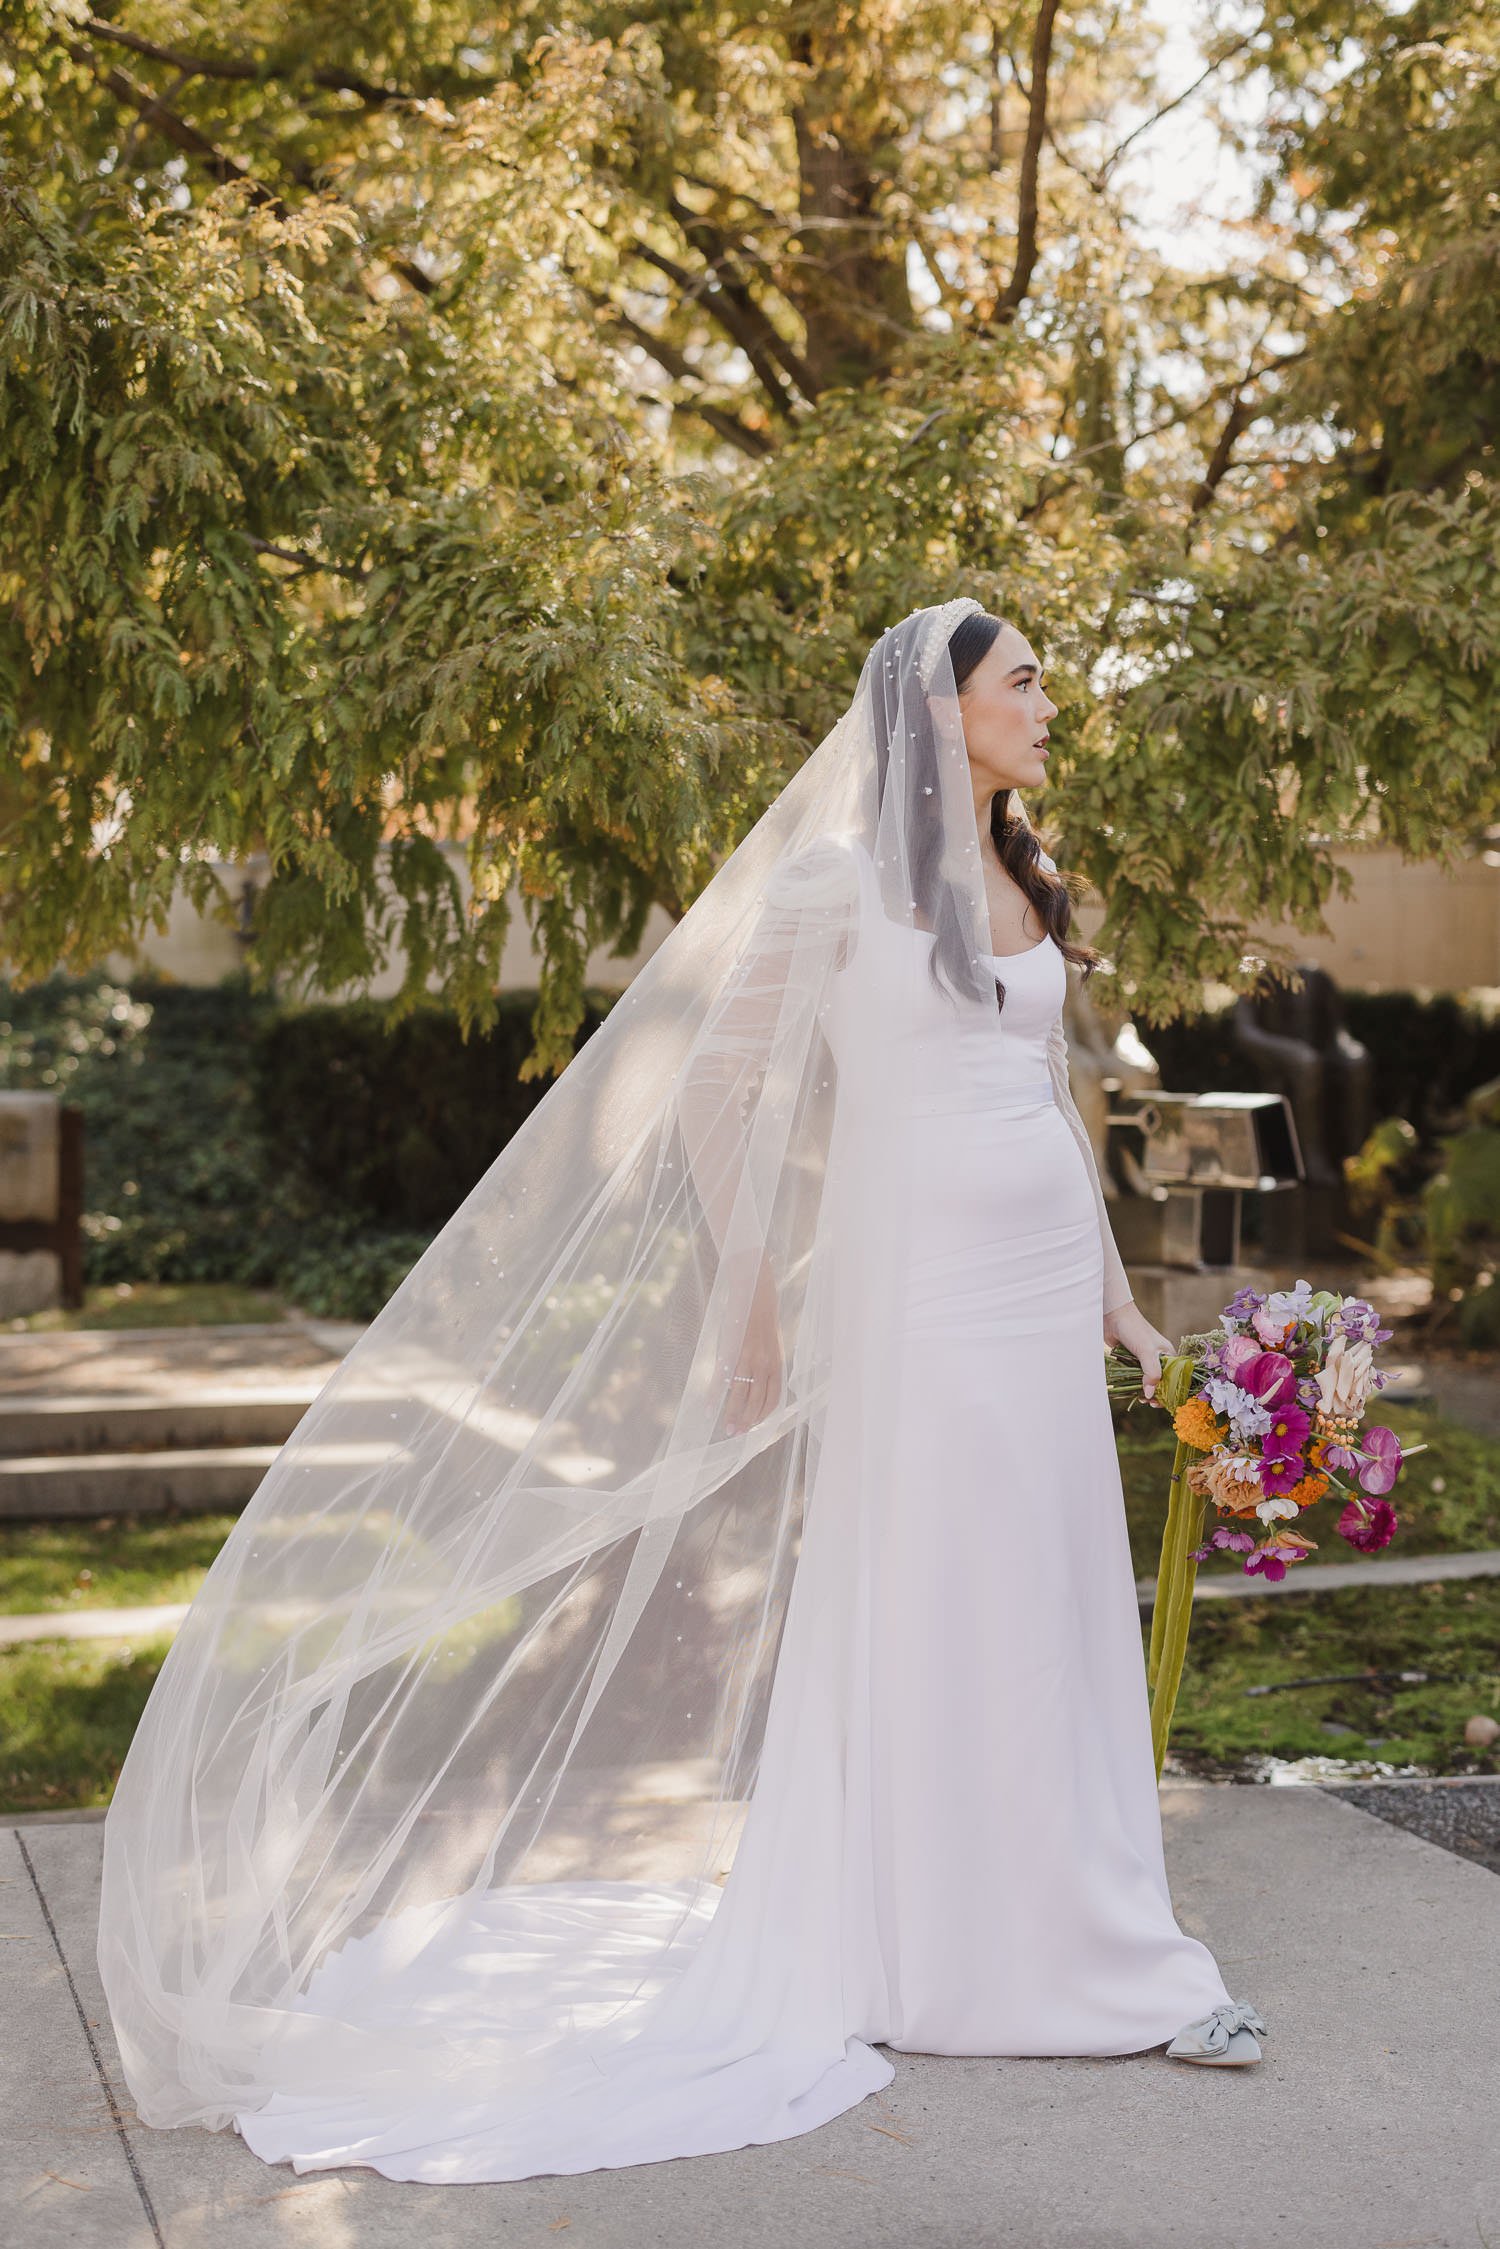 Bride wearing Sarah Seven Rosanna gown and pearl veil at sculpture garden wedding